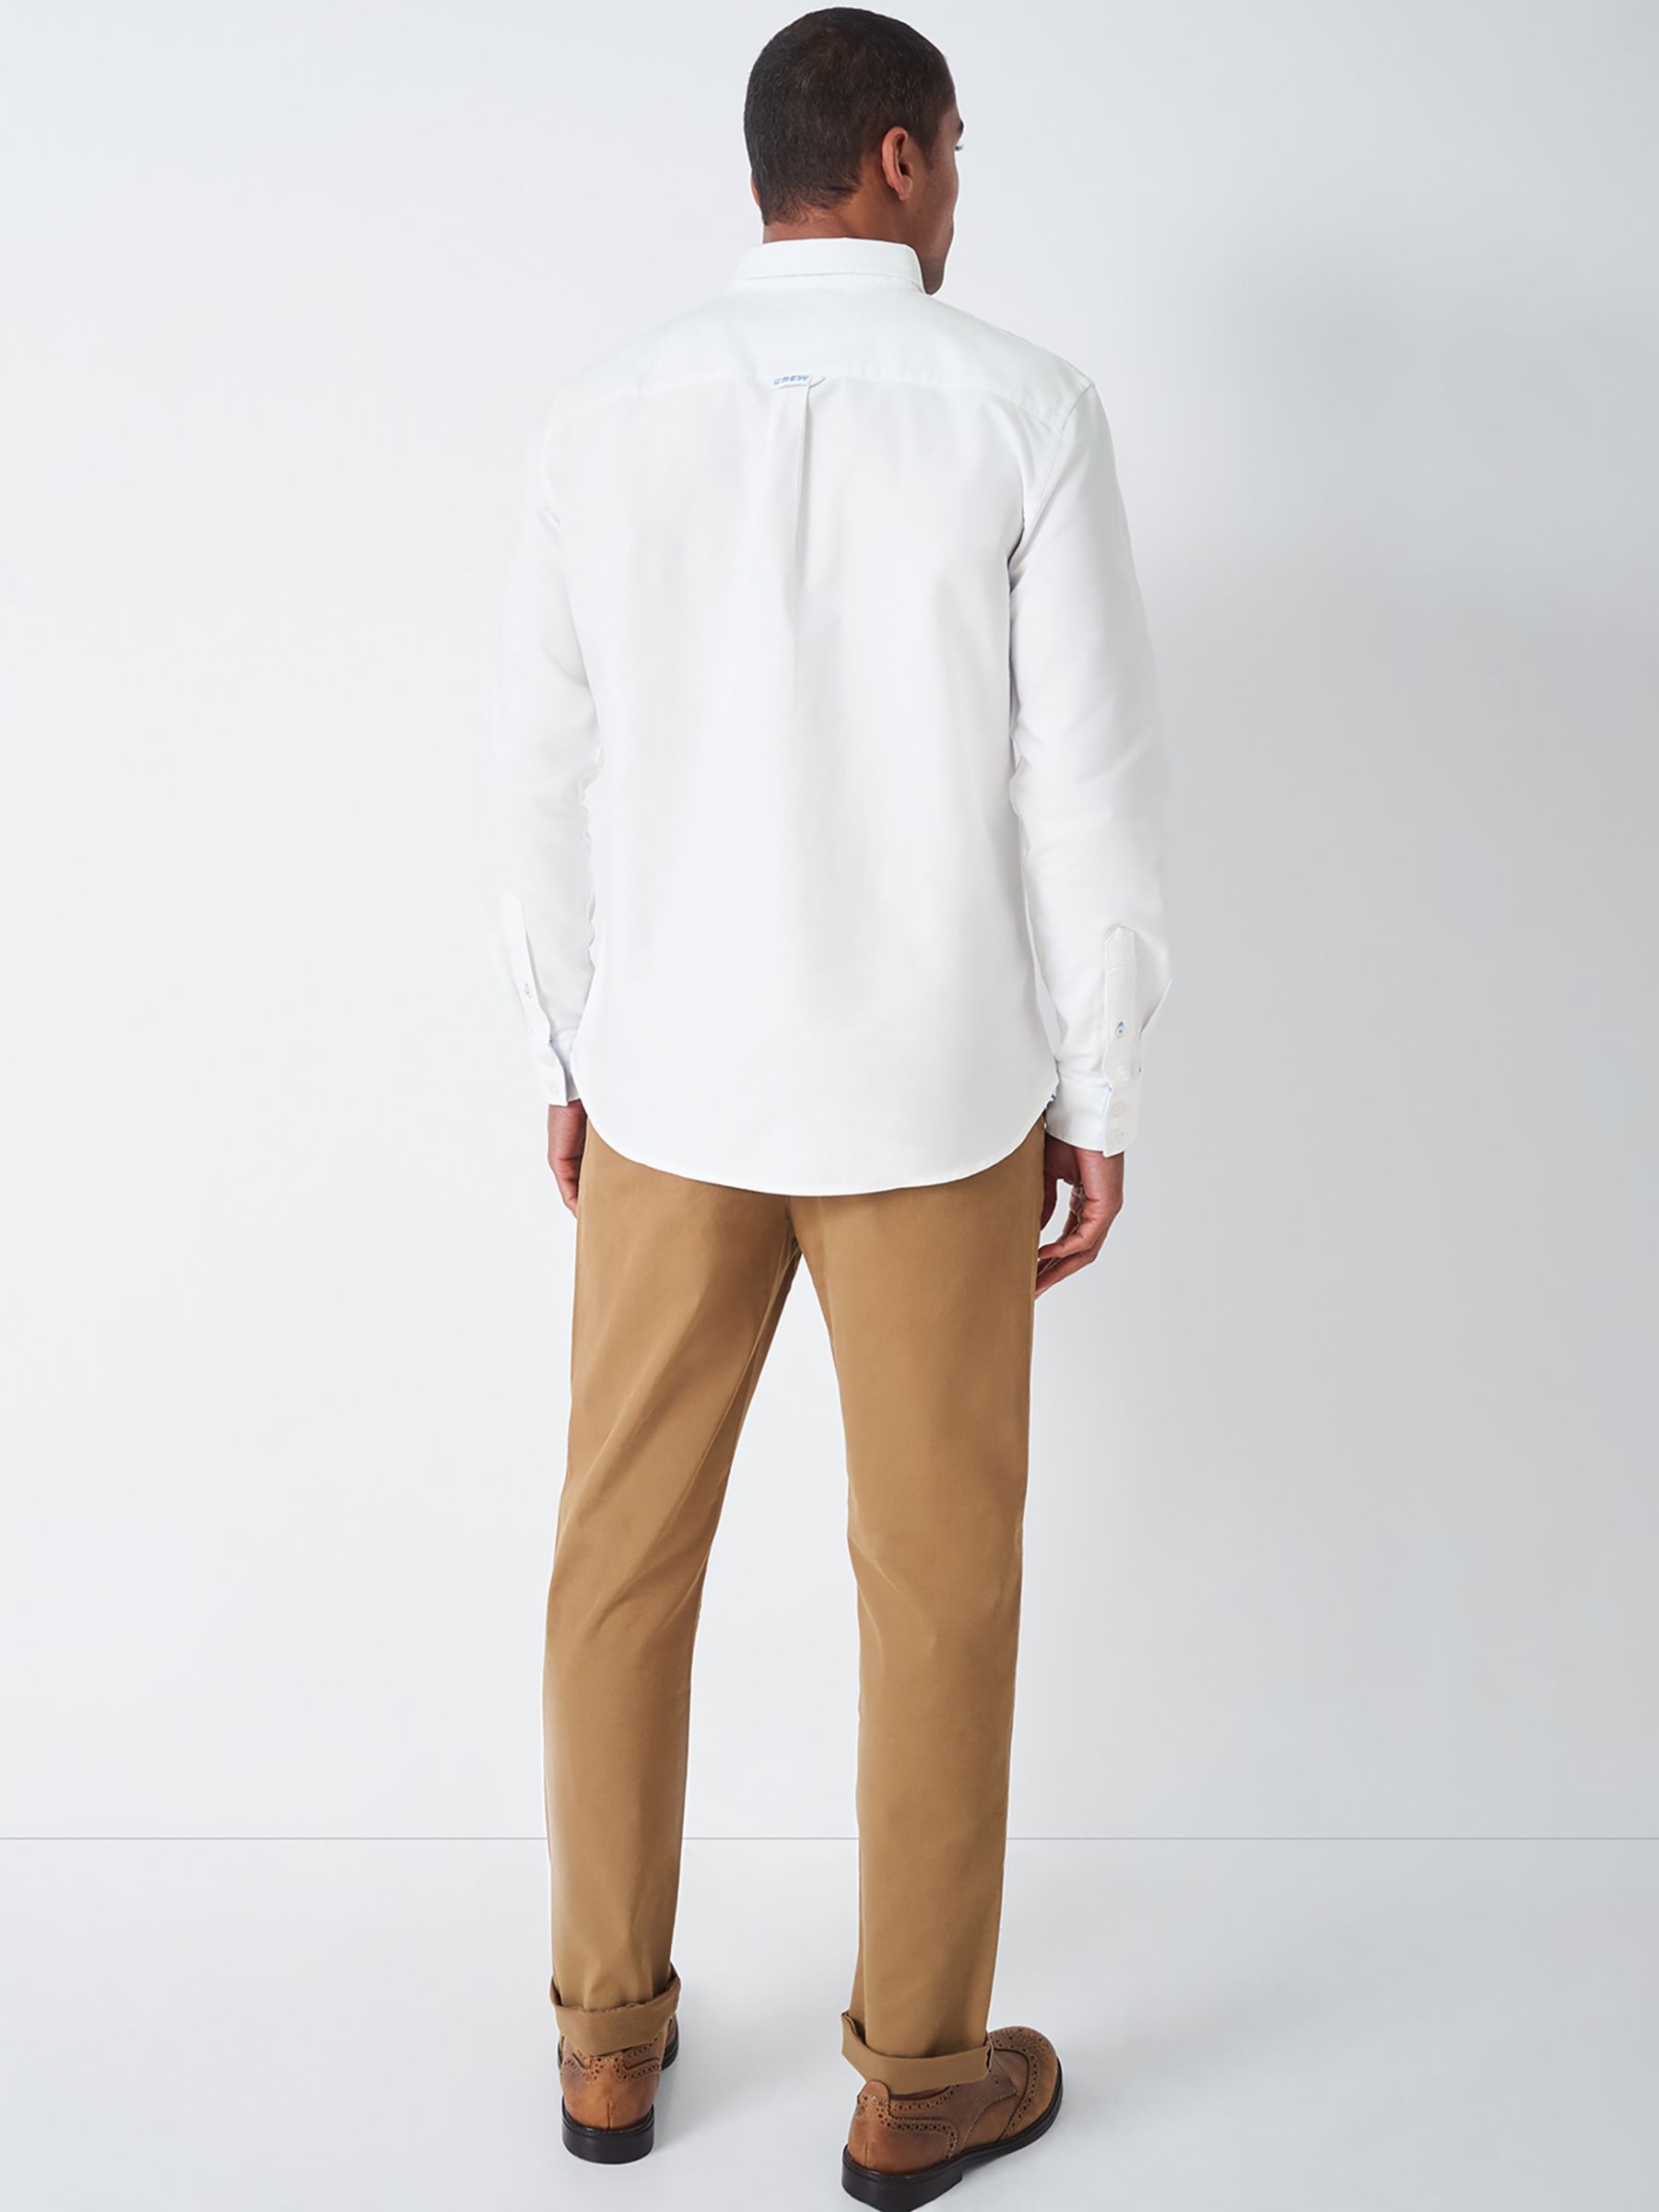 Crew Clothing Slim Fit Oxford Shirt, Bright White, S